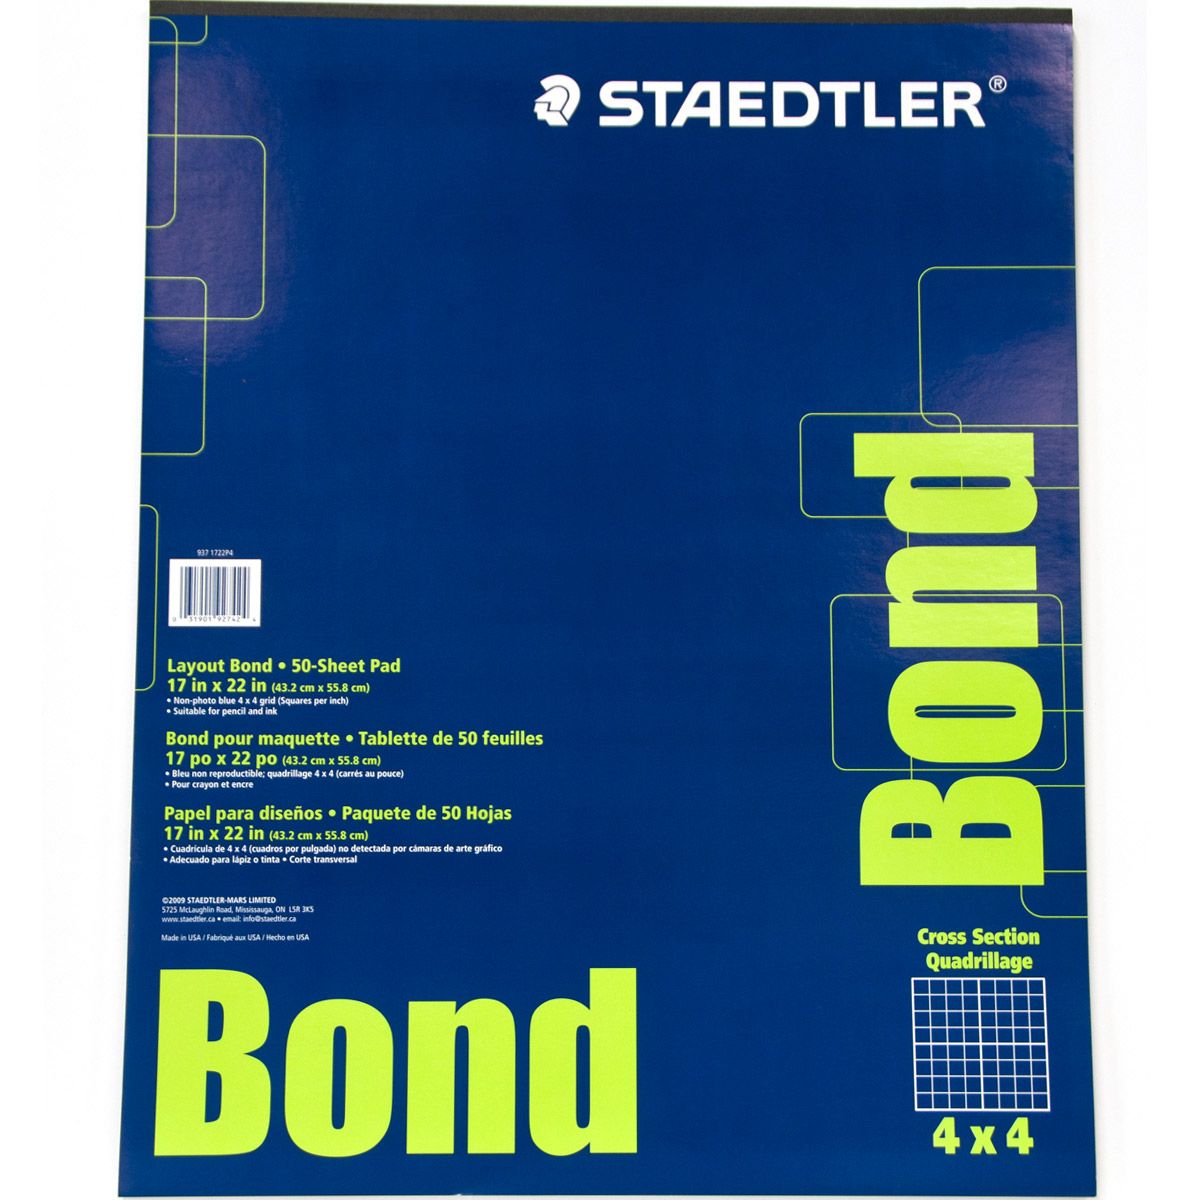 Steadtler Layout Bond Paper Pad